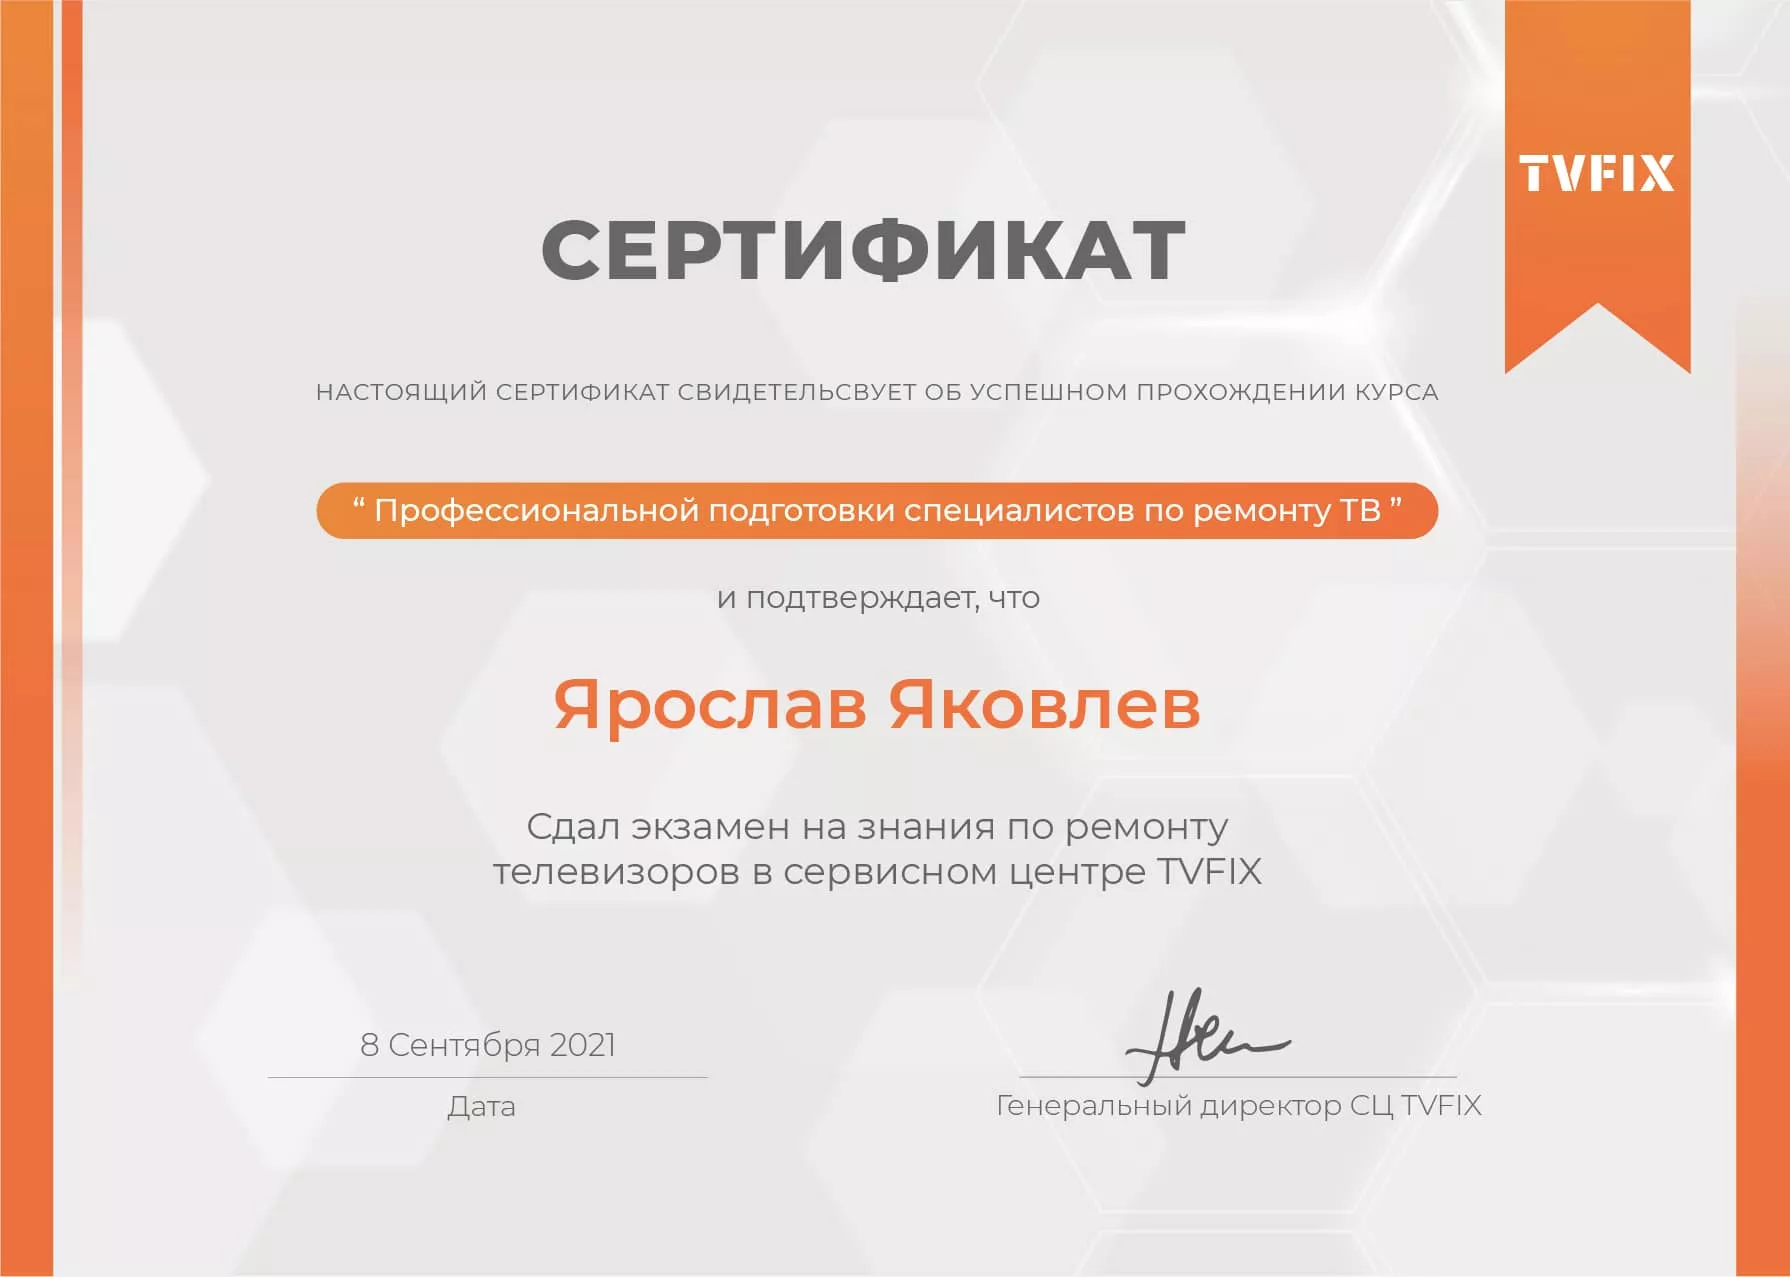 Ярослав Яковлев сертификат телемастера